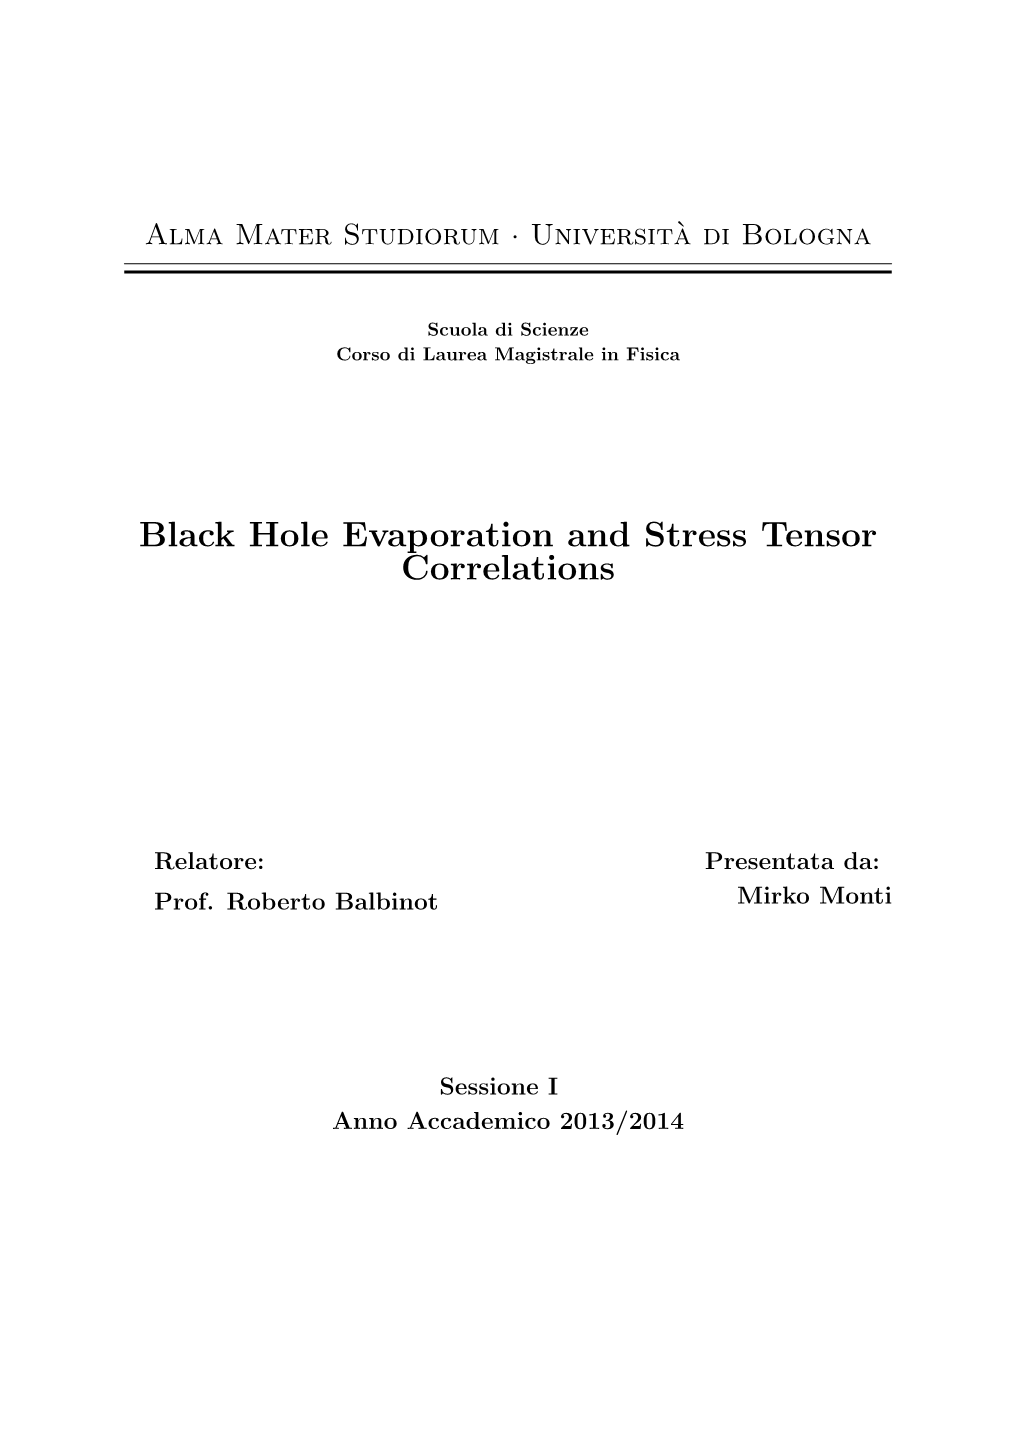 Black Hole Evaporation and Stress Tensor Correlations